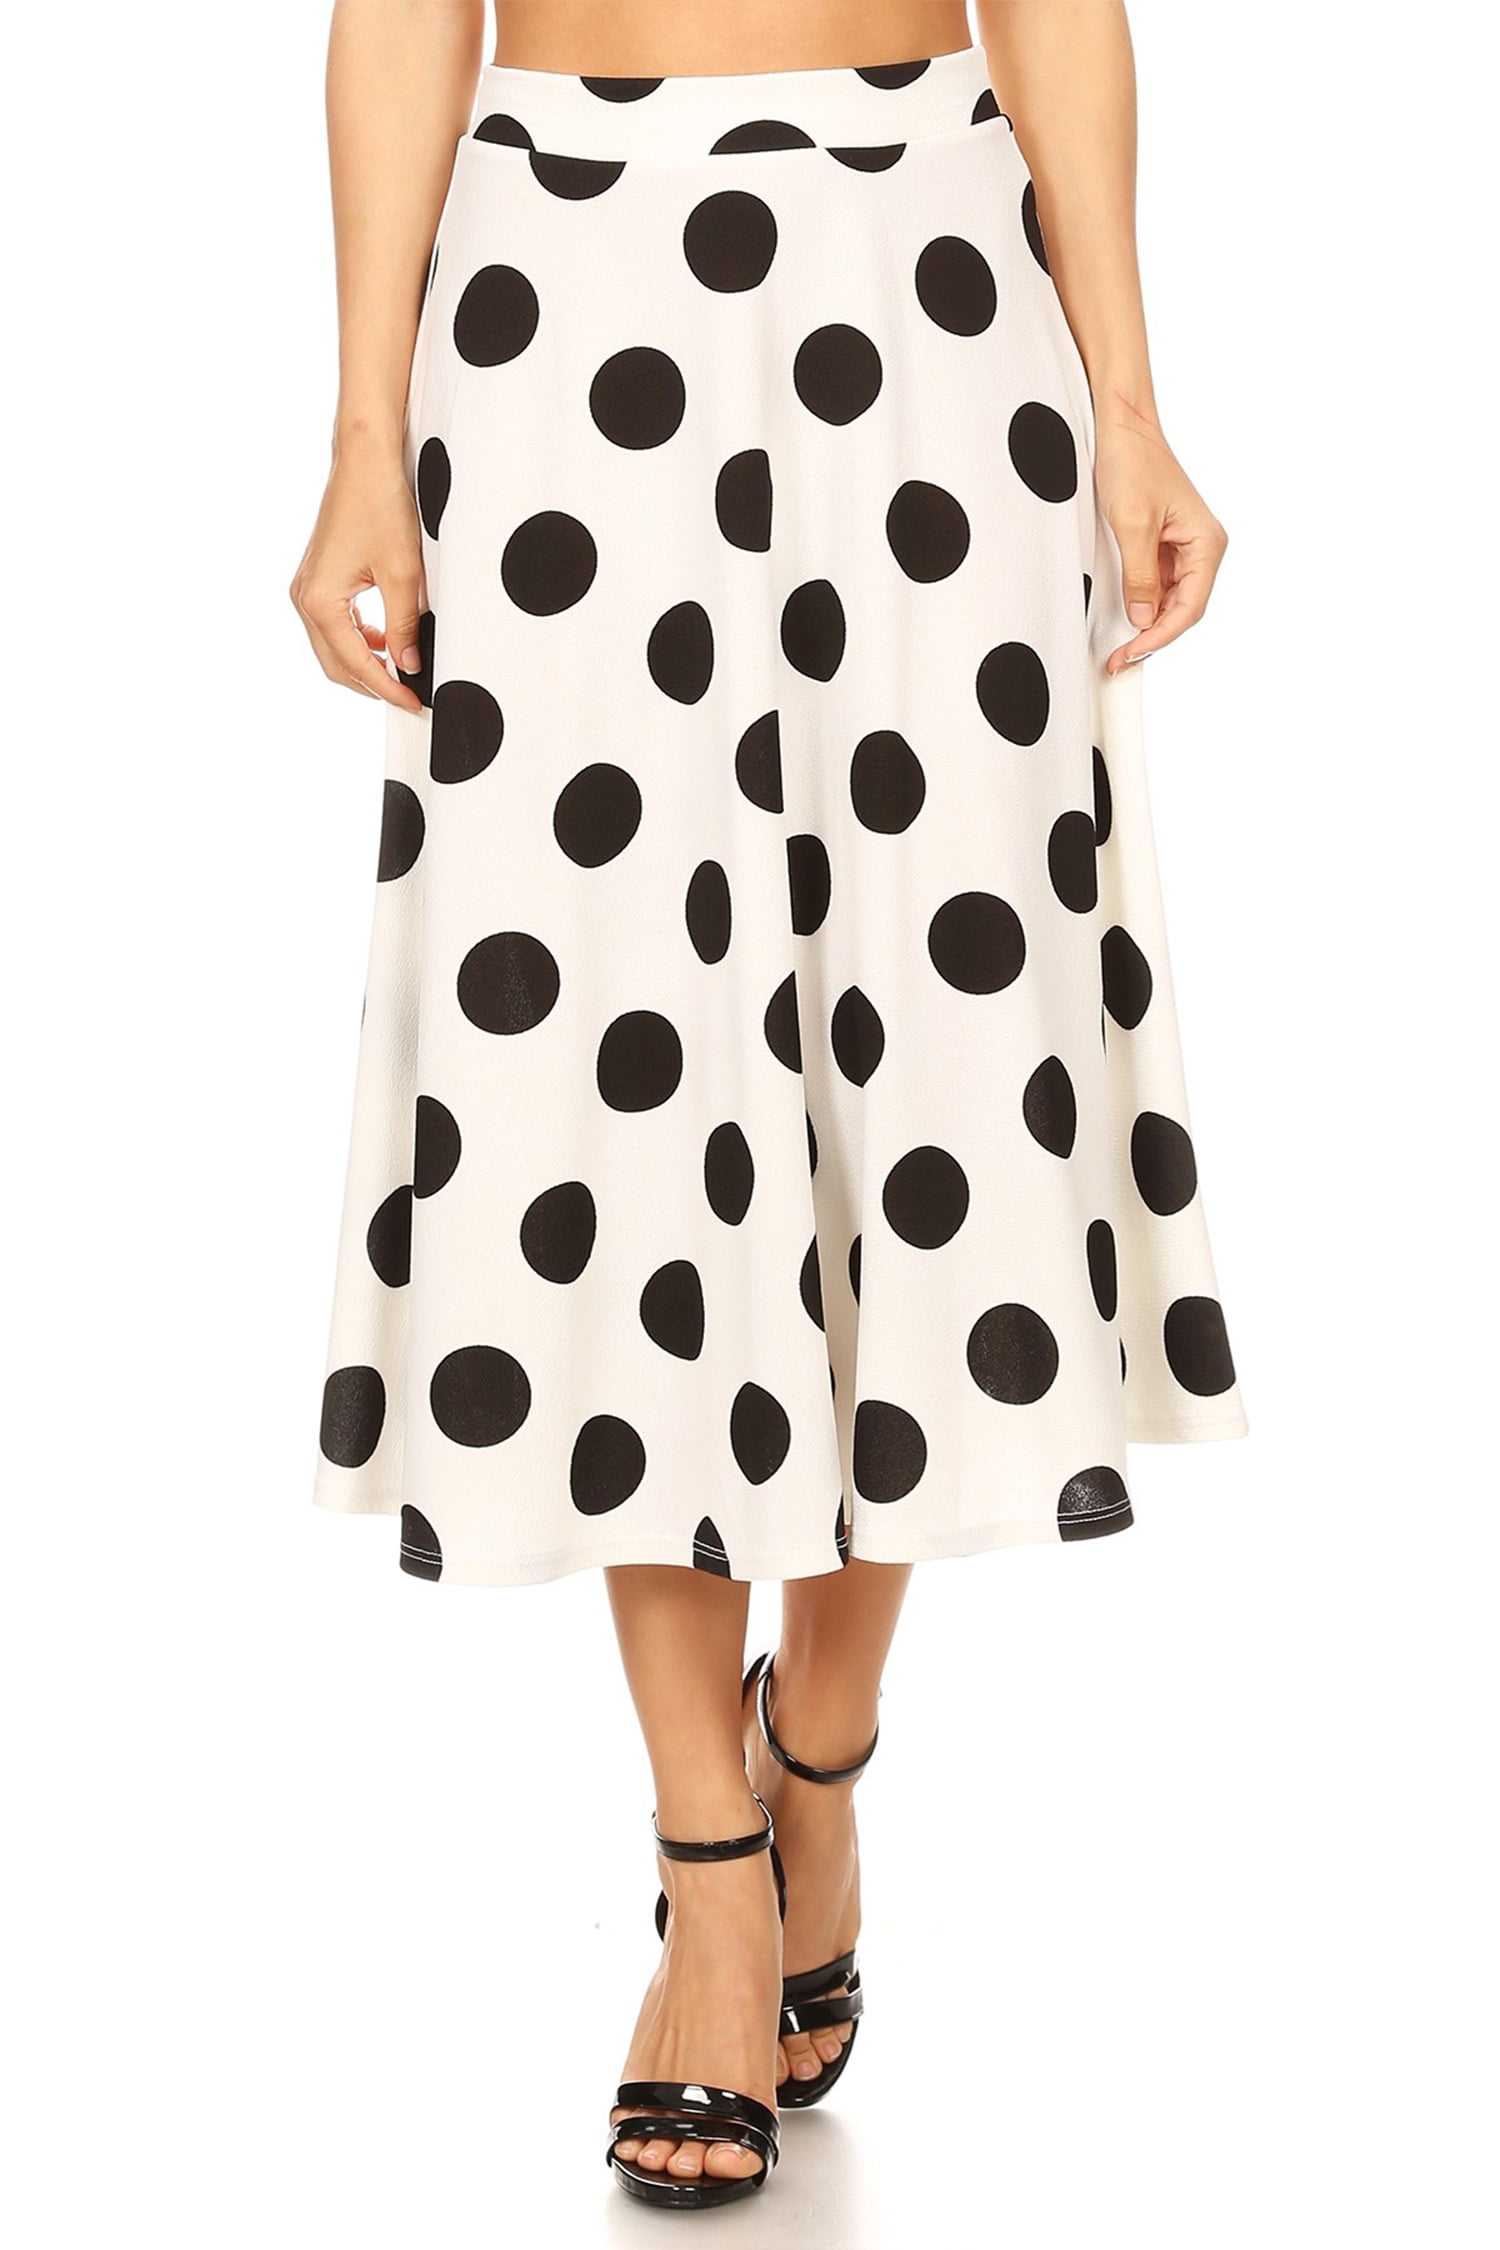 Women's Polka Dot Pattern Skirt - Walmart.com